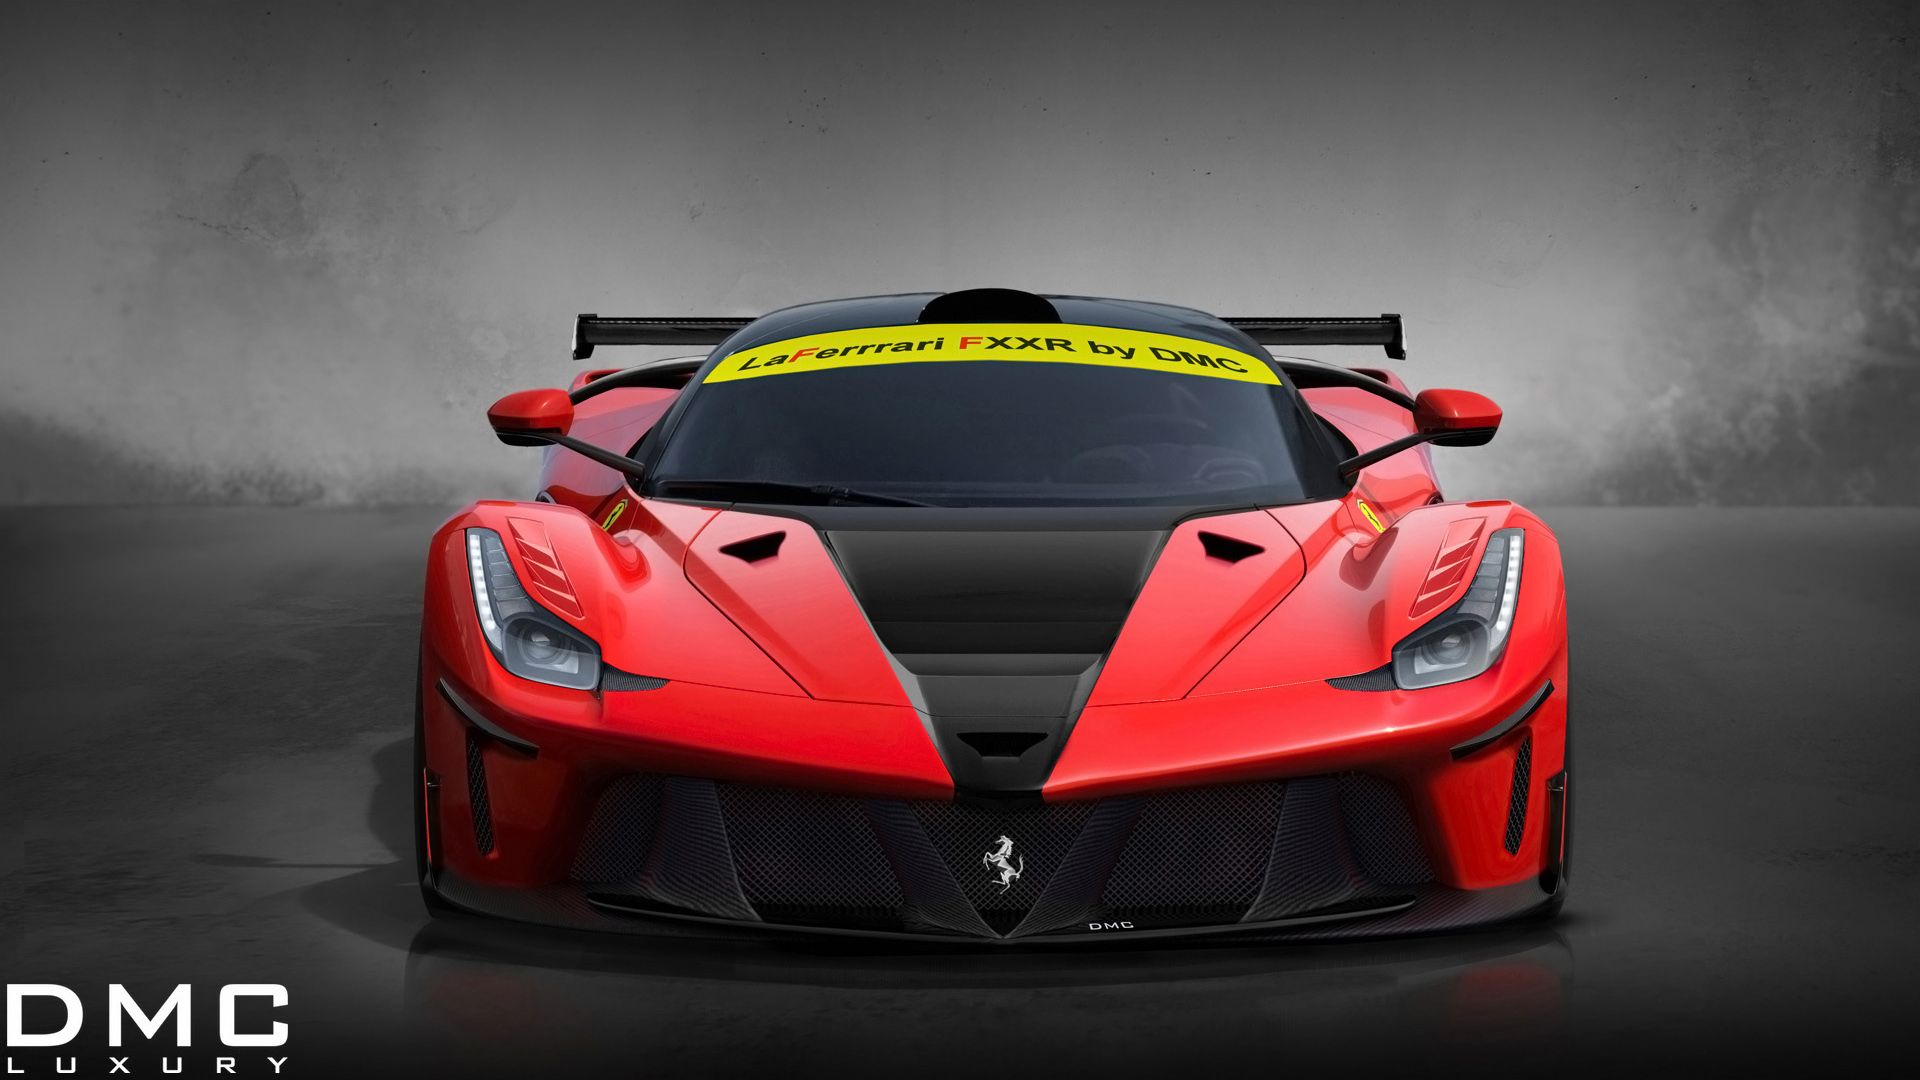 Fondos de Ferrari # 1482N7E, 0.42 Mb - 4USkY